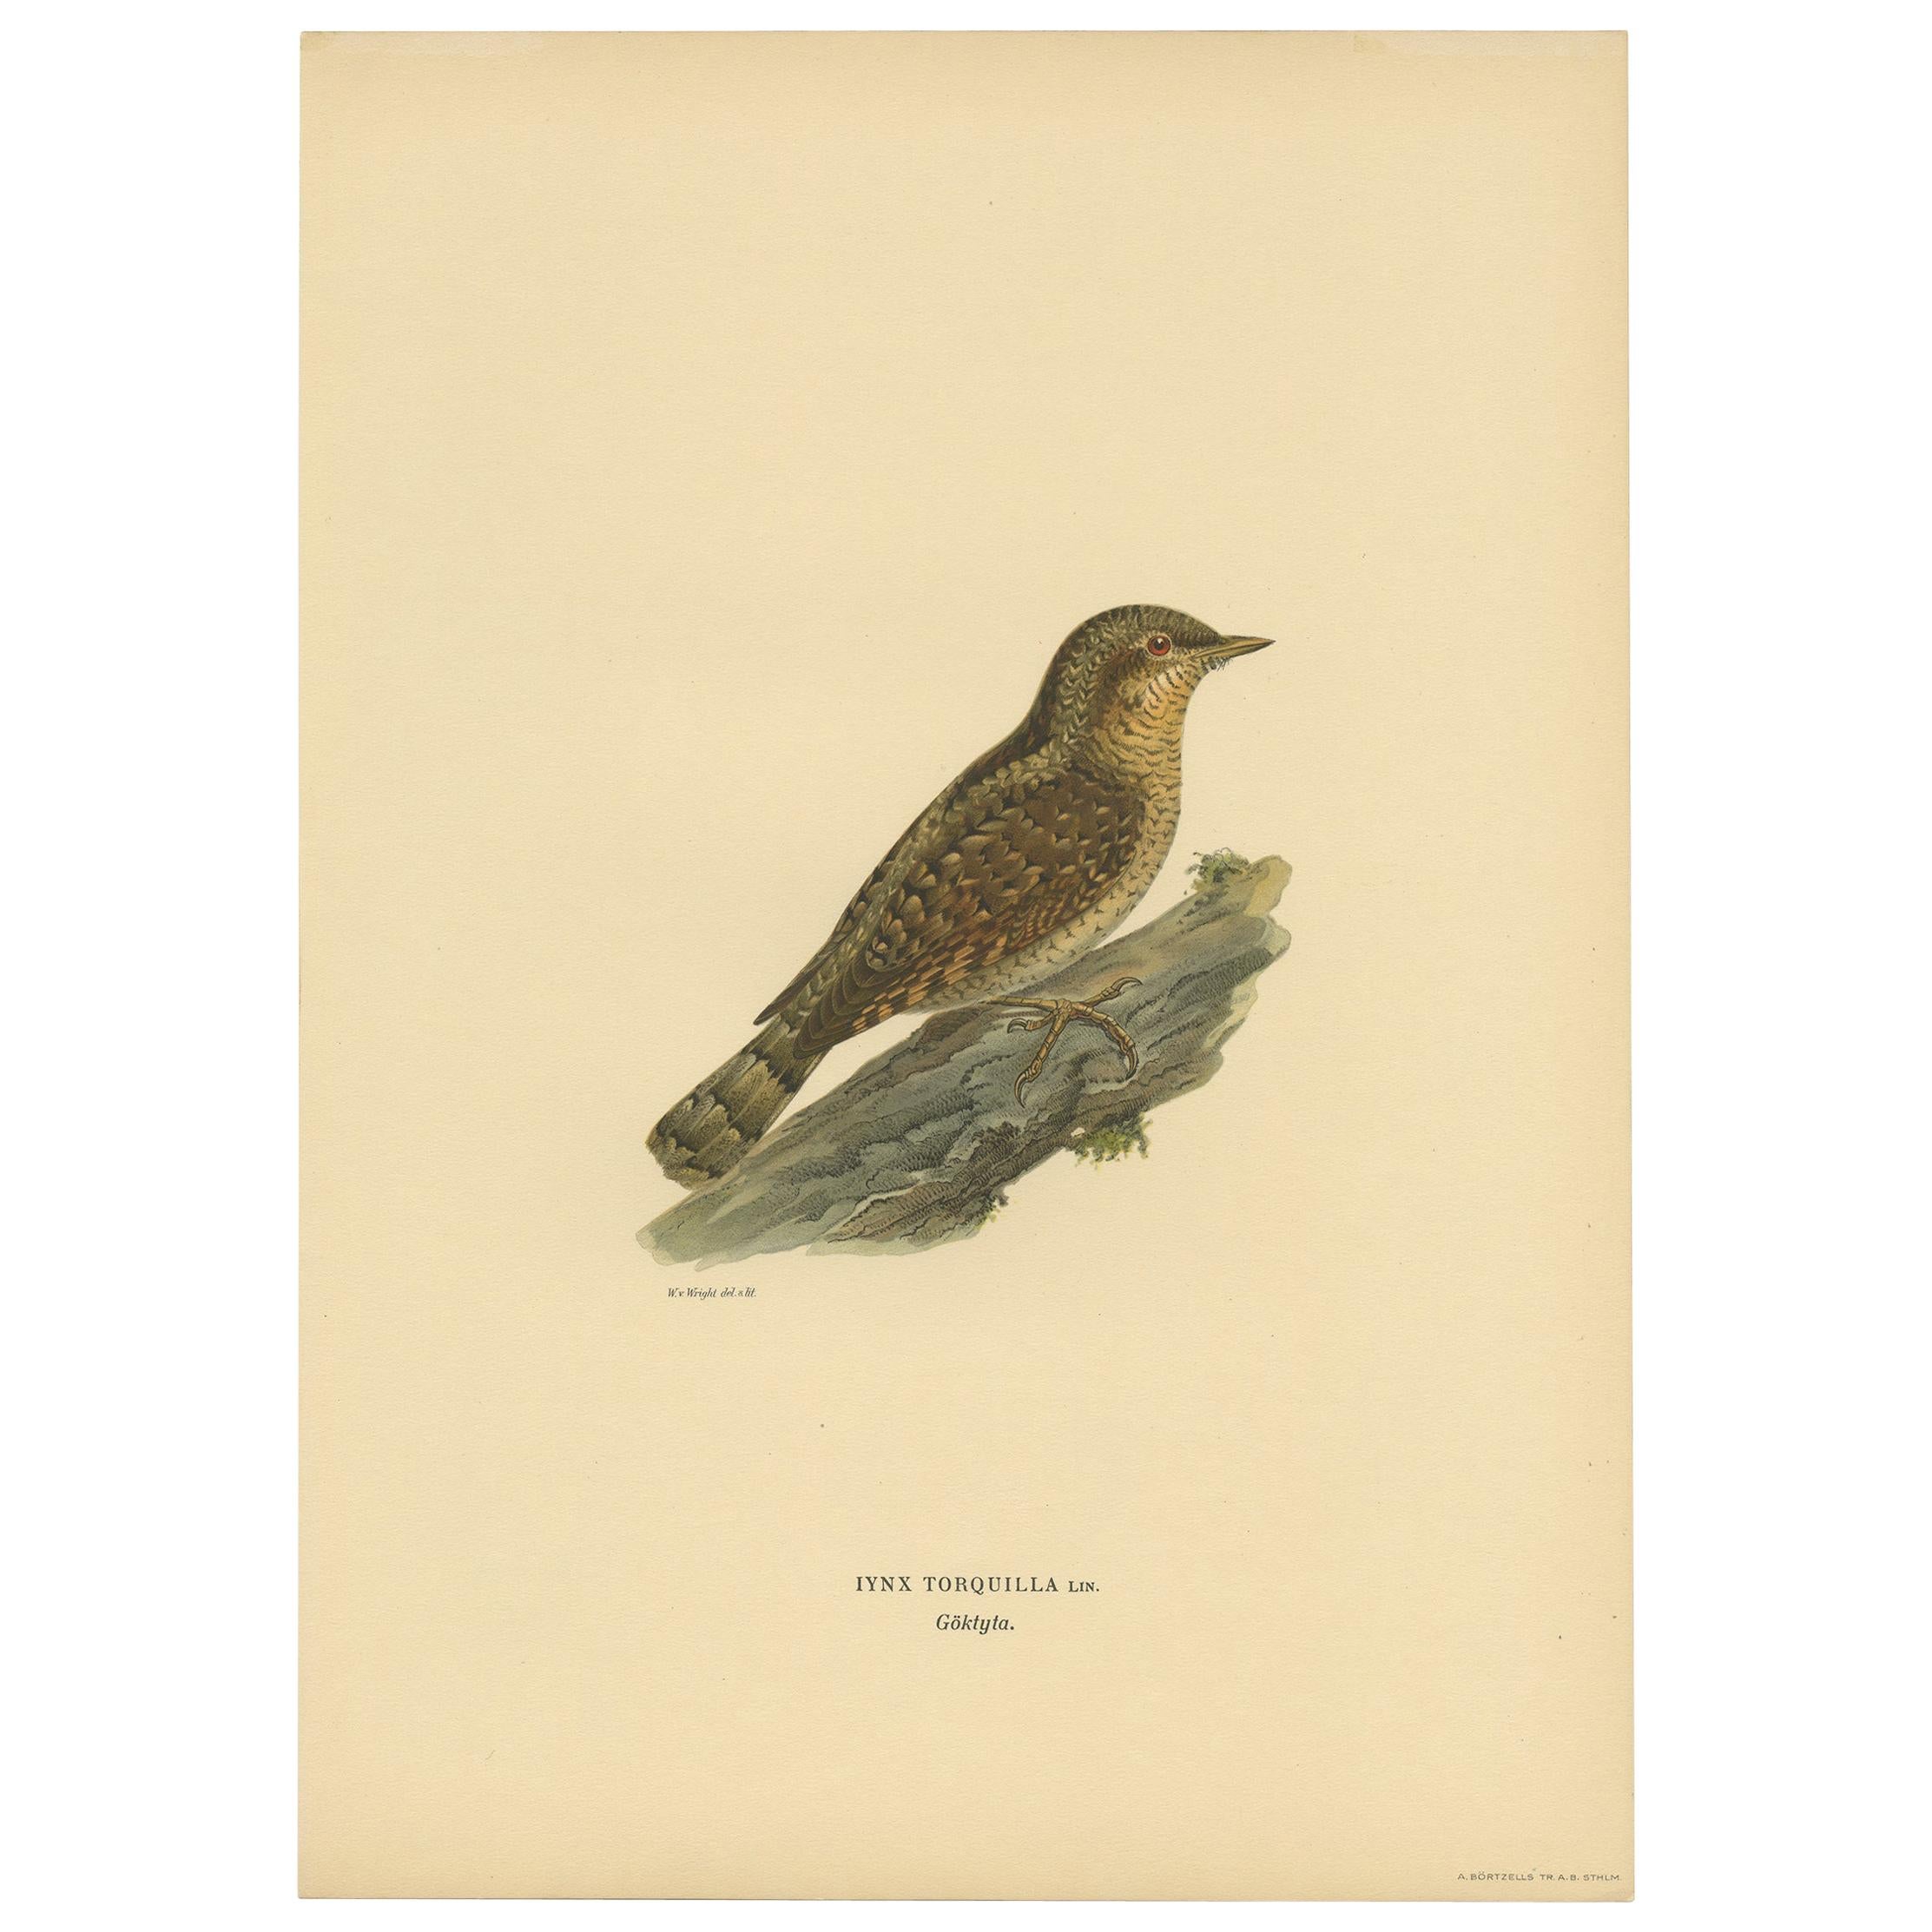 Antique Bird Print of the Eurasian Wryneck by Von Wright, 1927